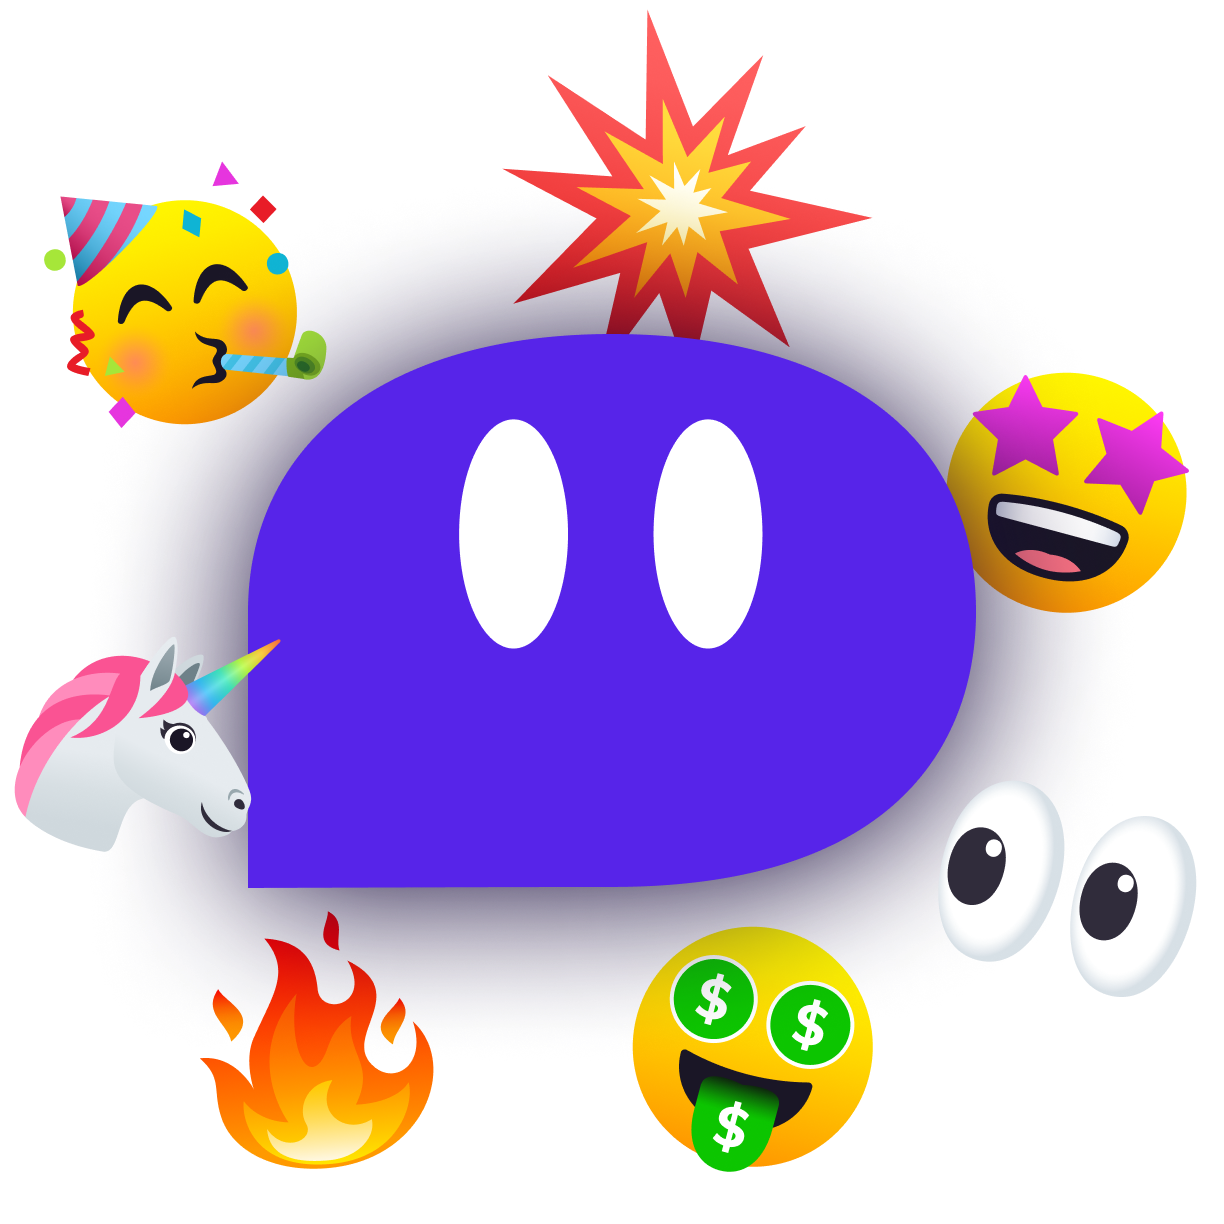 Welcome to Emoji!